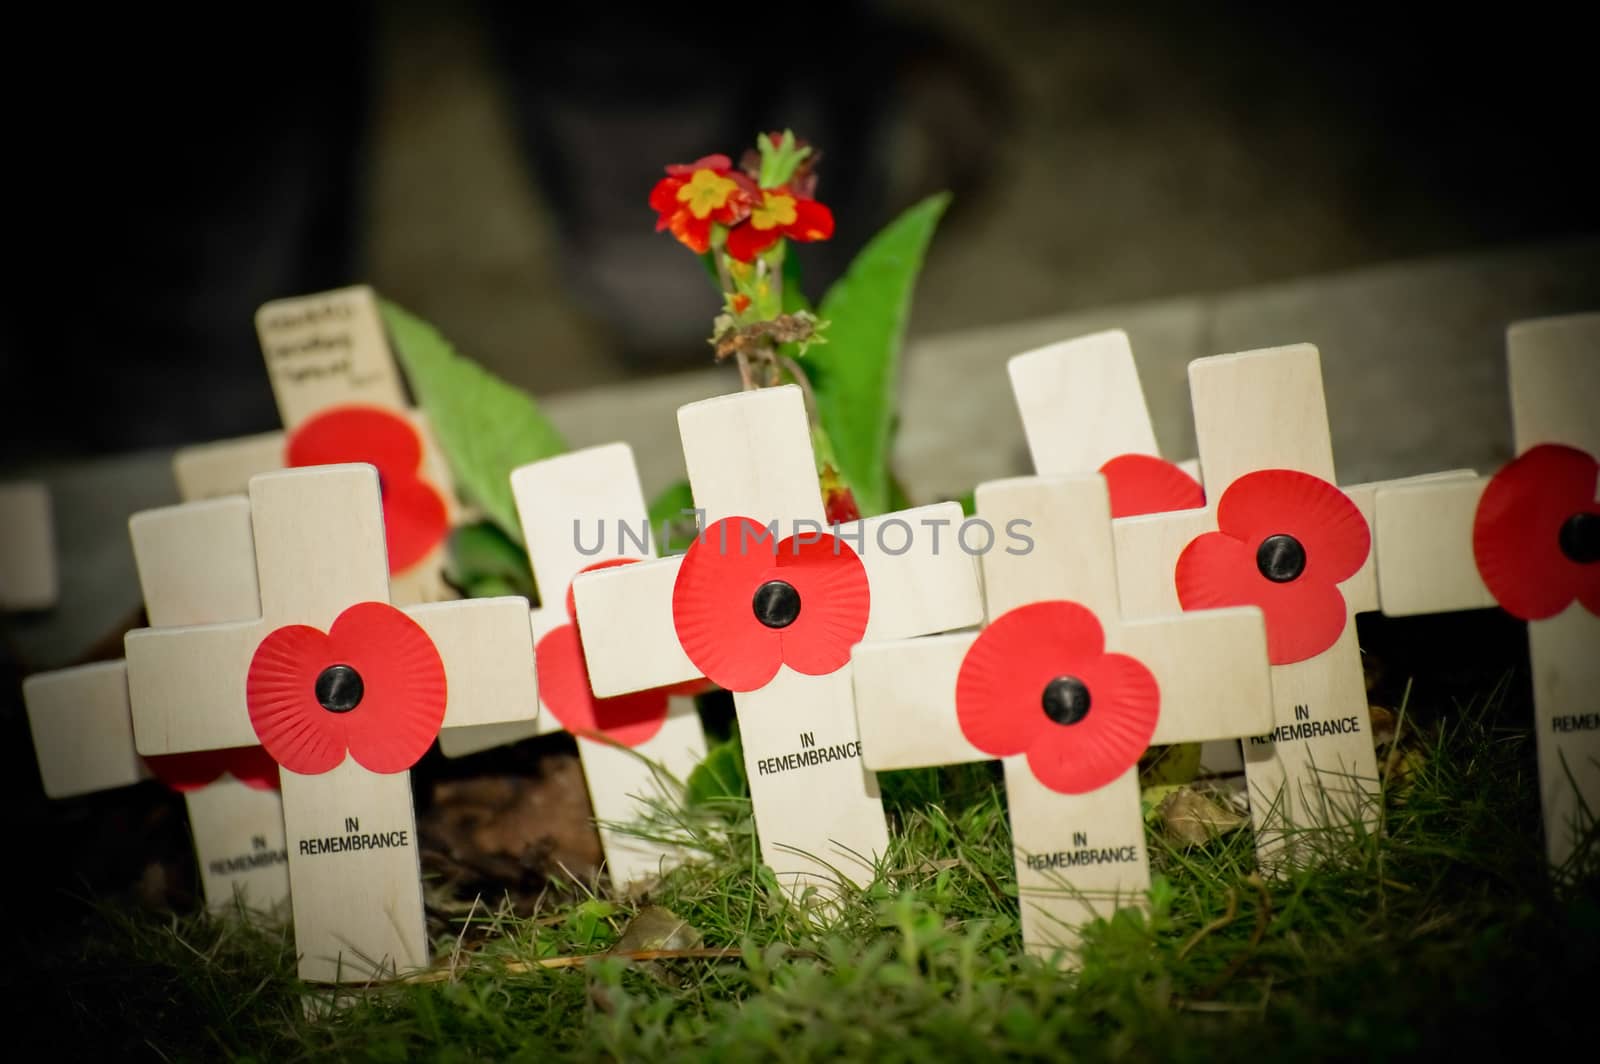 torchlight beam illuminating wartime commemorative poppy crosses in a graveyard